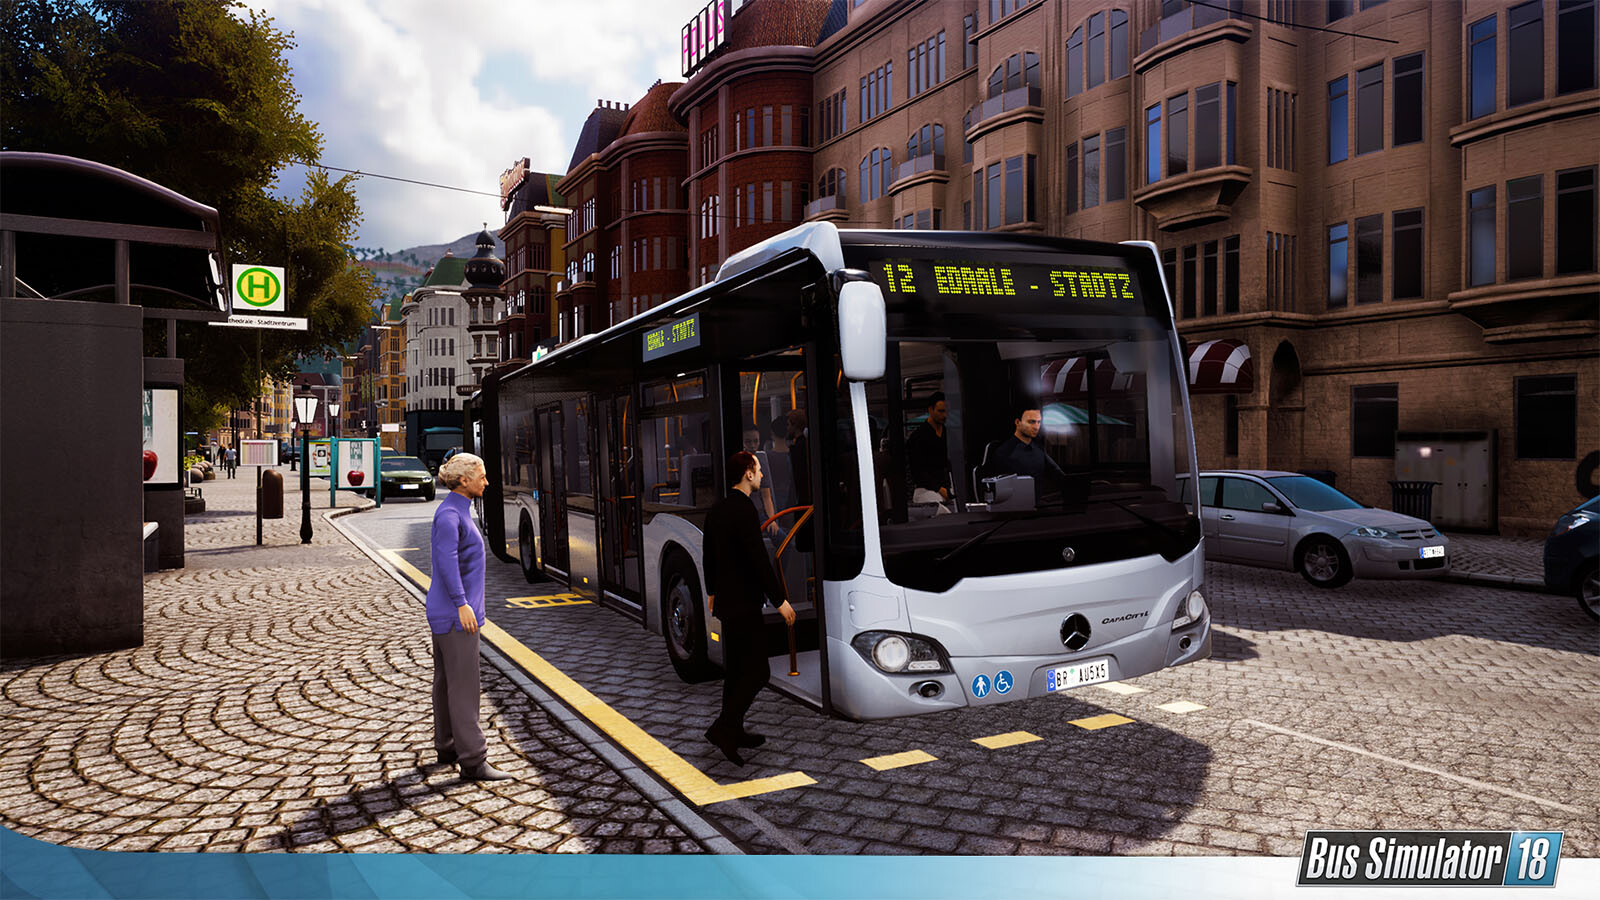 telecharger bus simulator 18